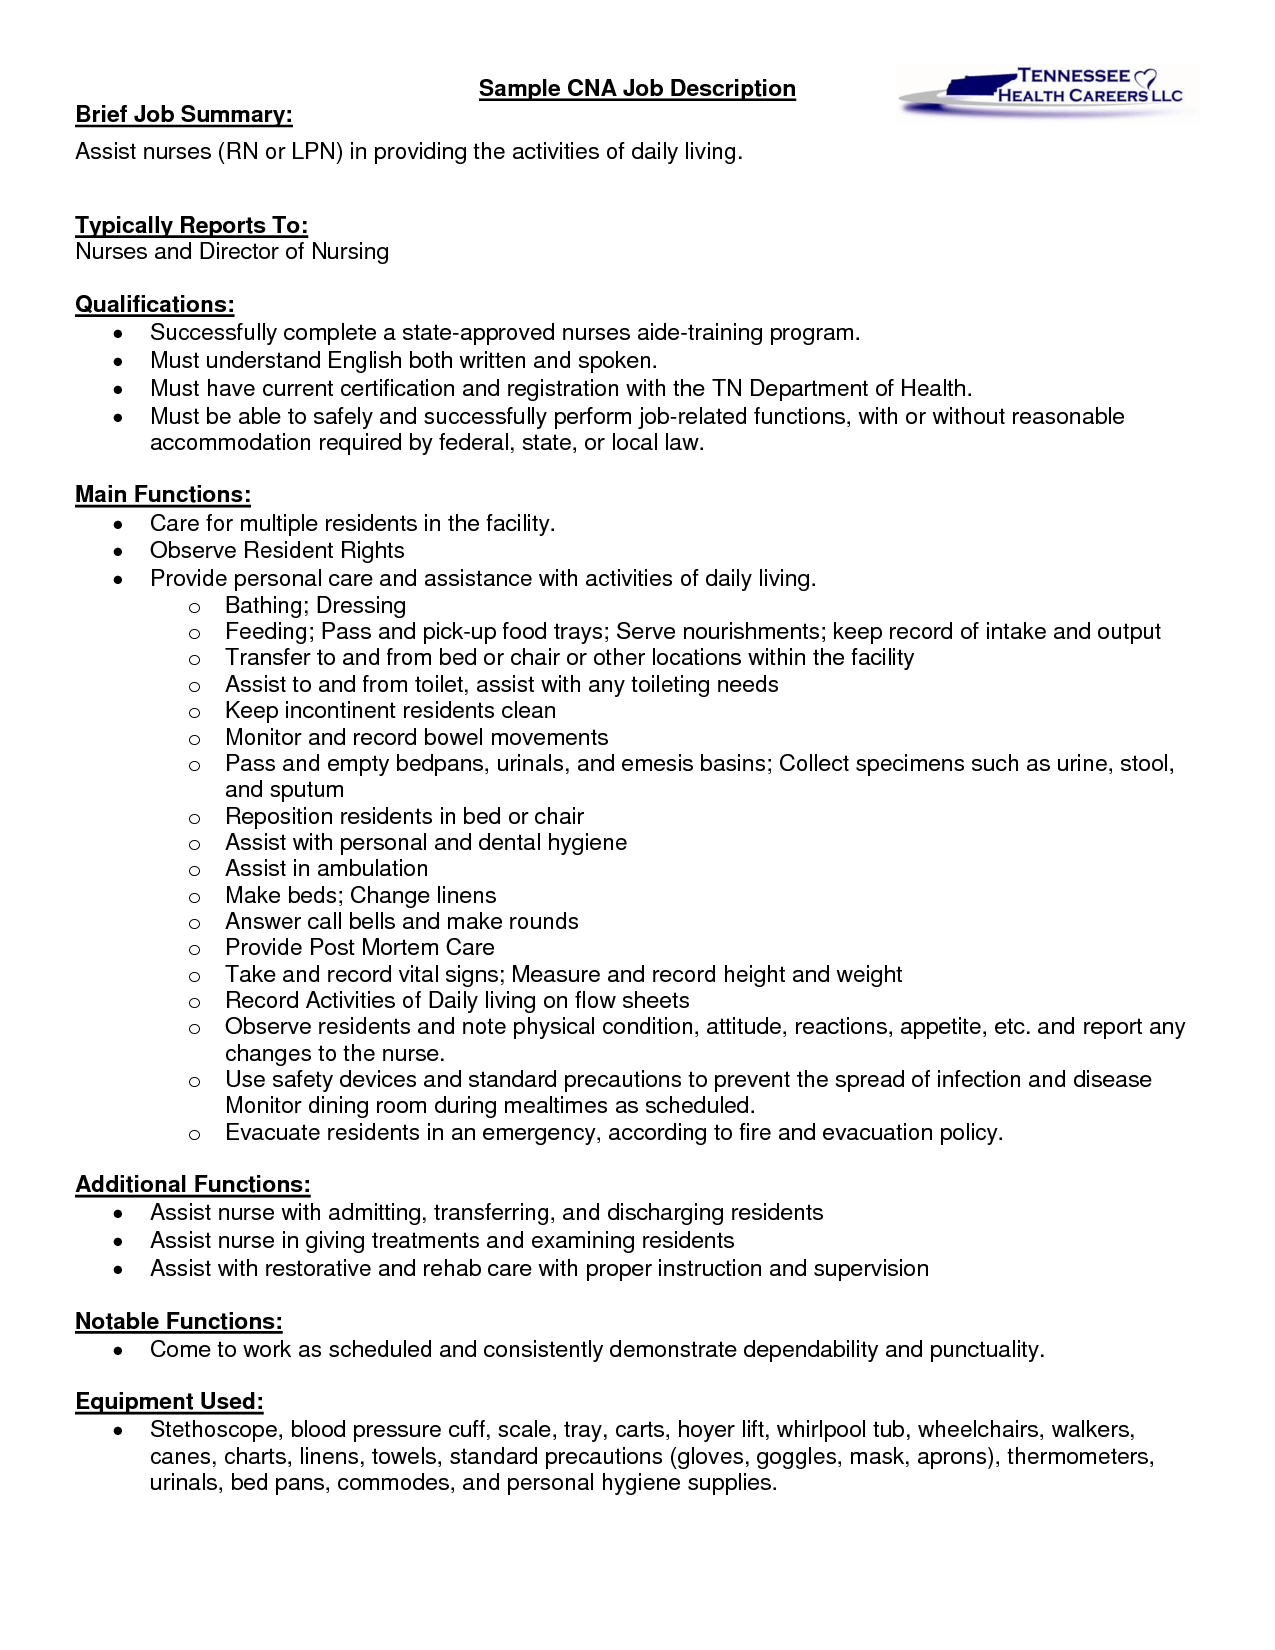 resume for cna skylogic resume for template cna winsome